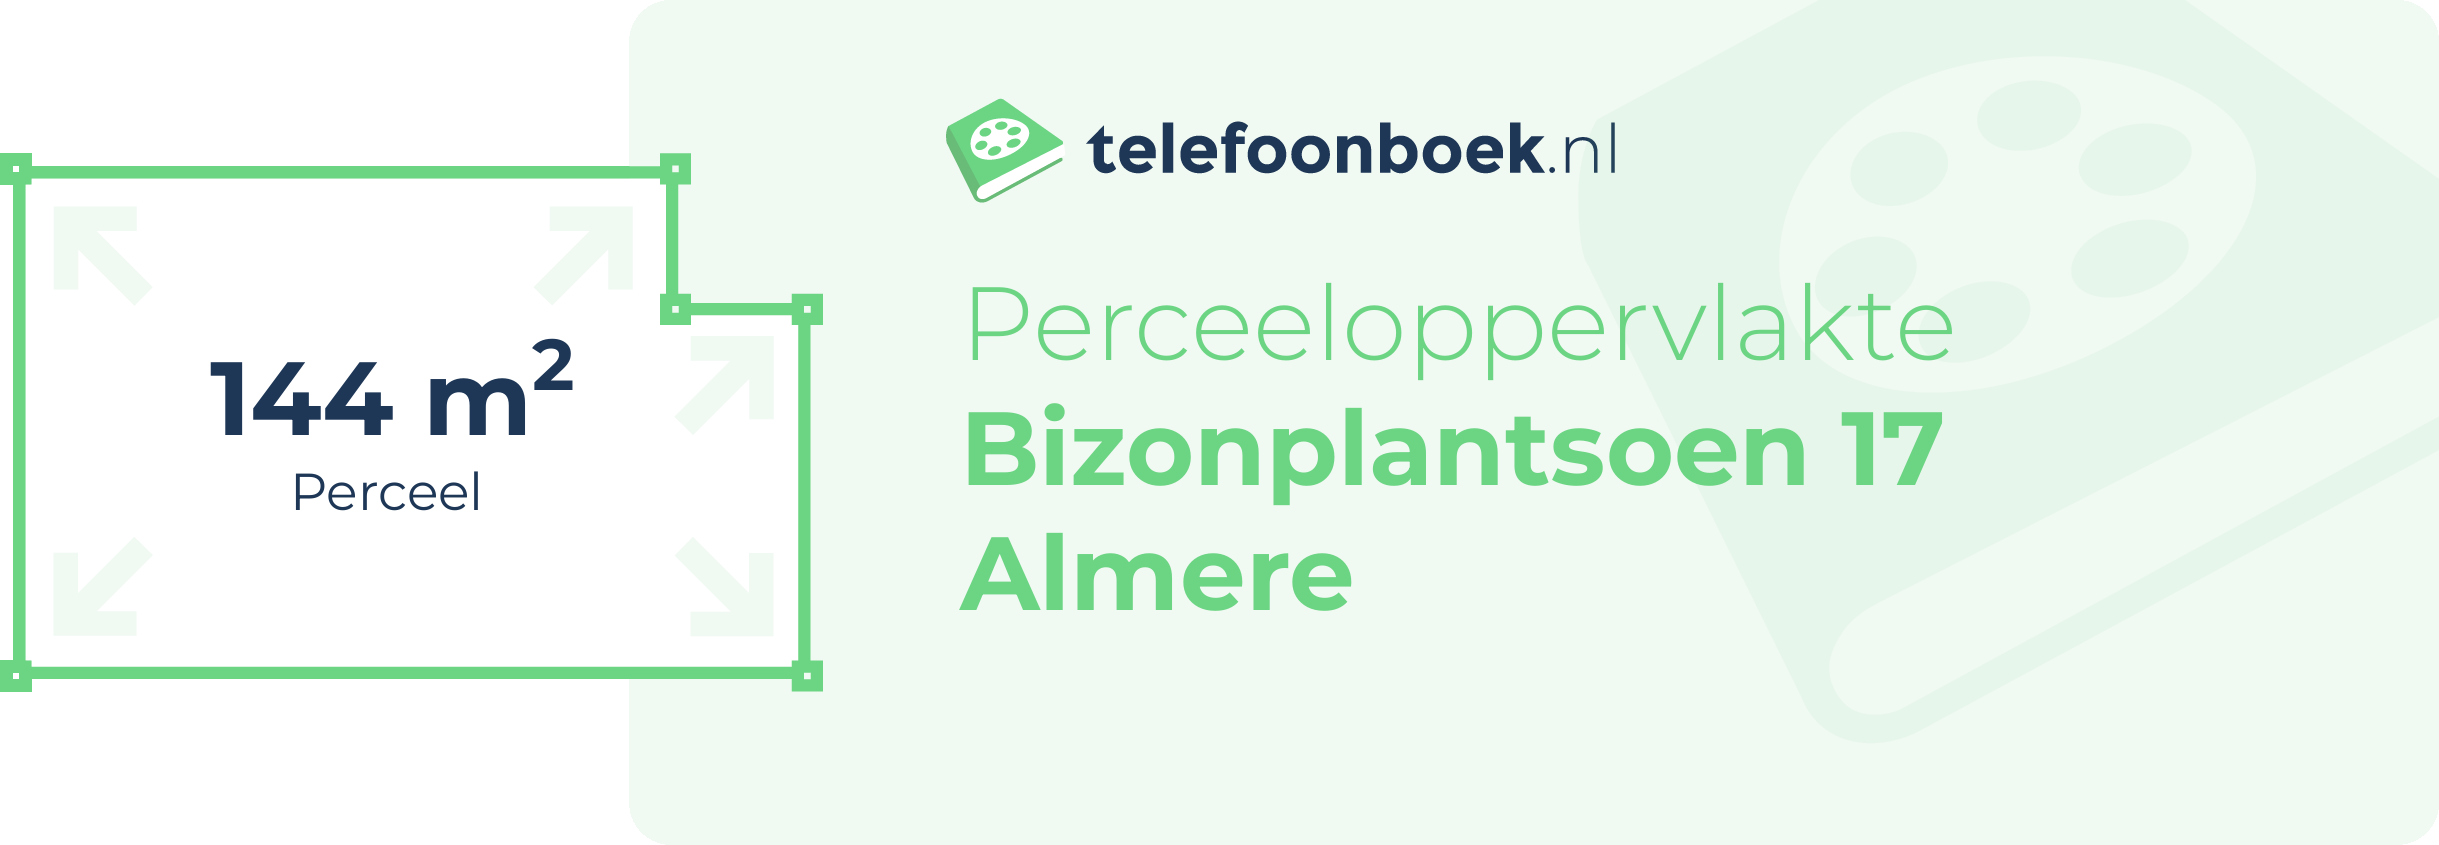 Perceeloppervlakte Bizonplantsoen 17 Almere